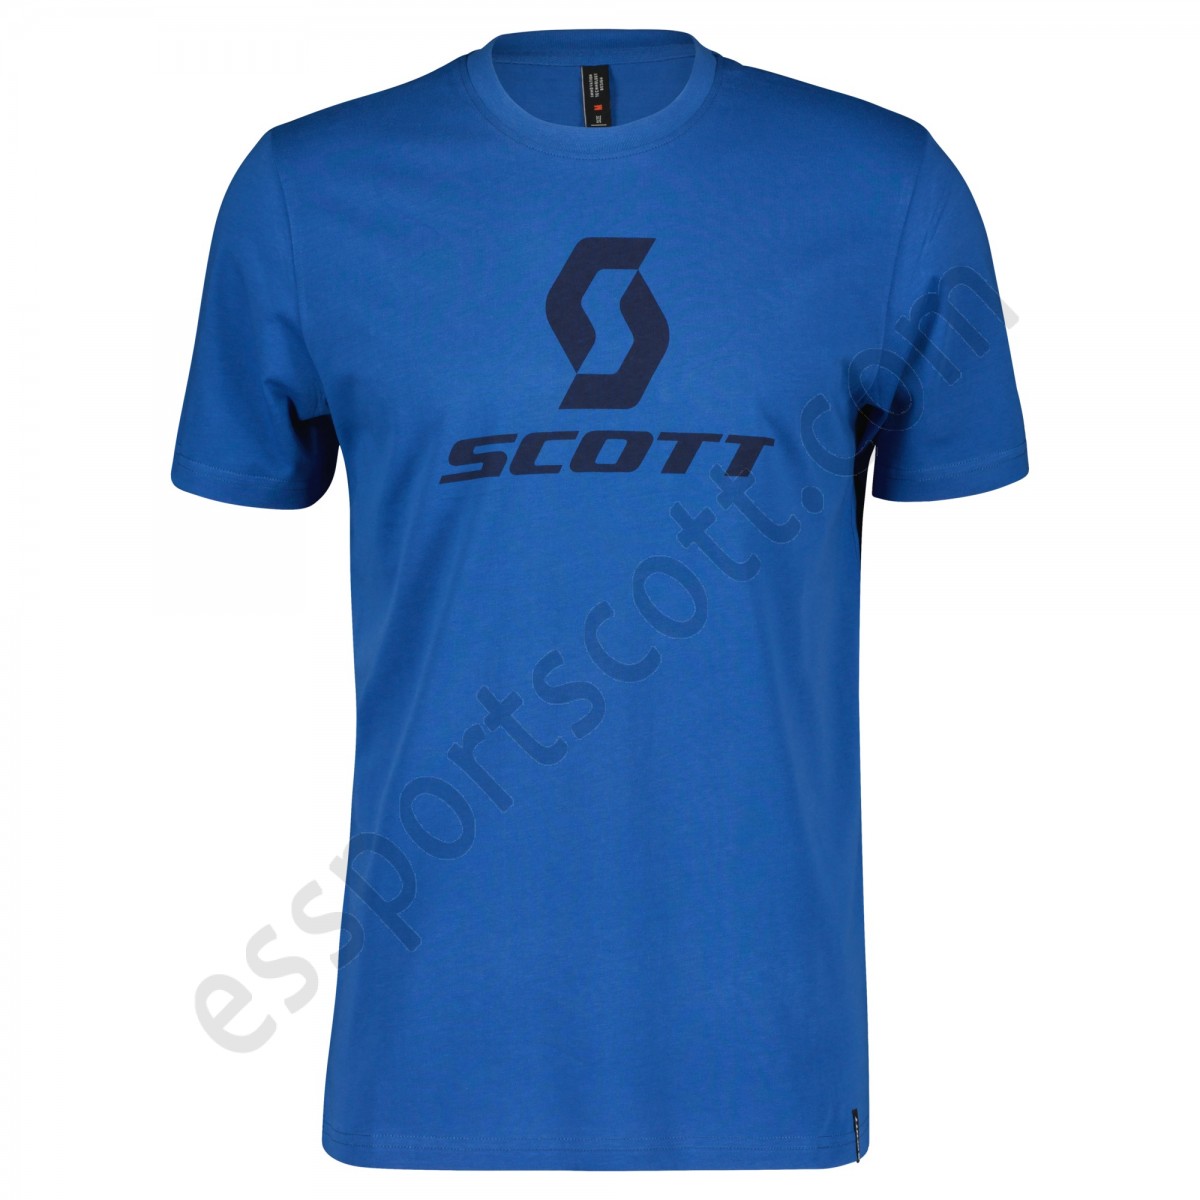 Scott Tienda ◇ Camiseta de manga corta para hombre Icon - -0